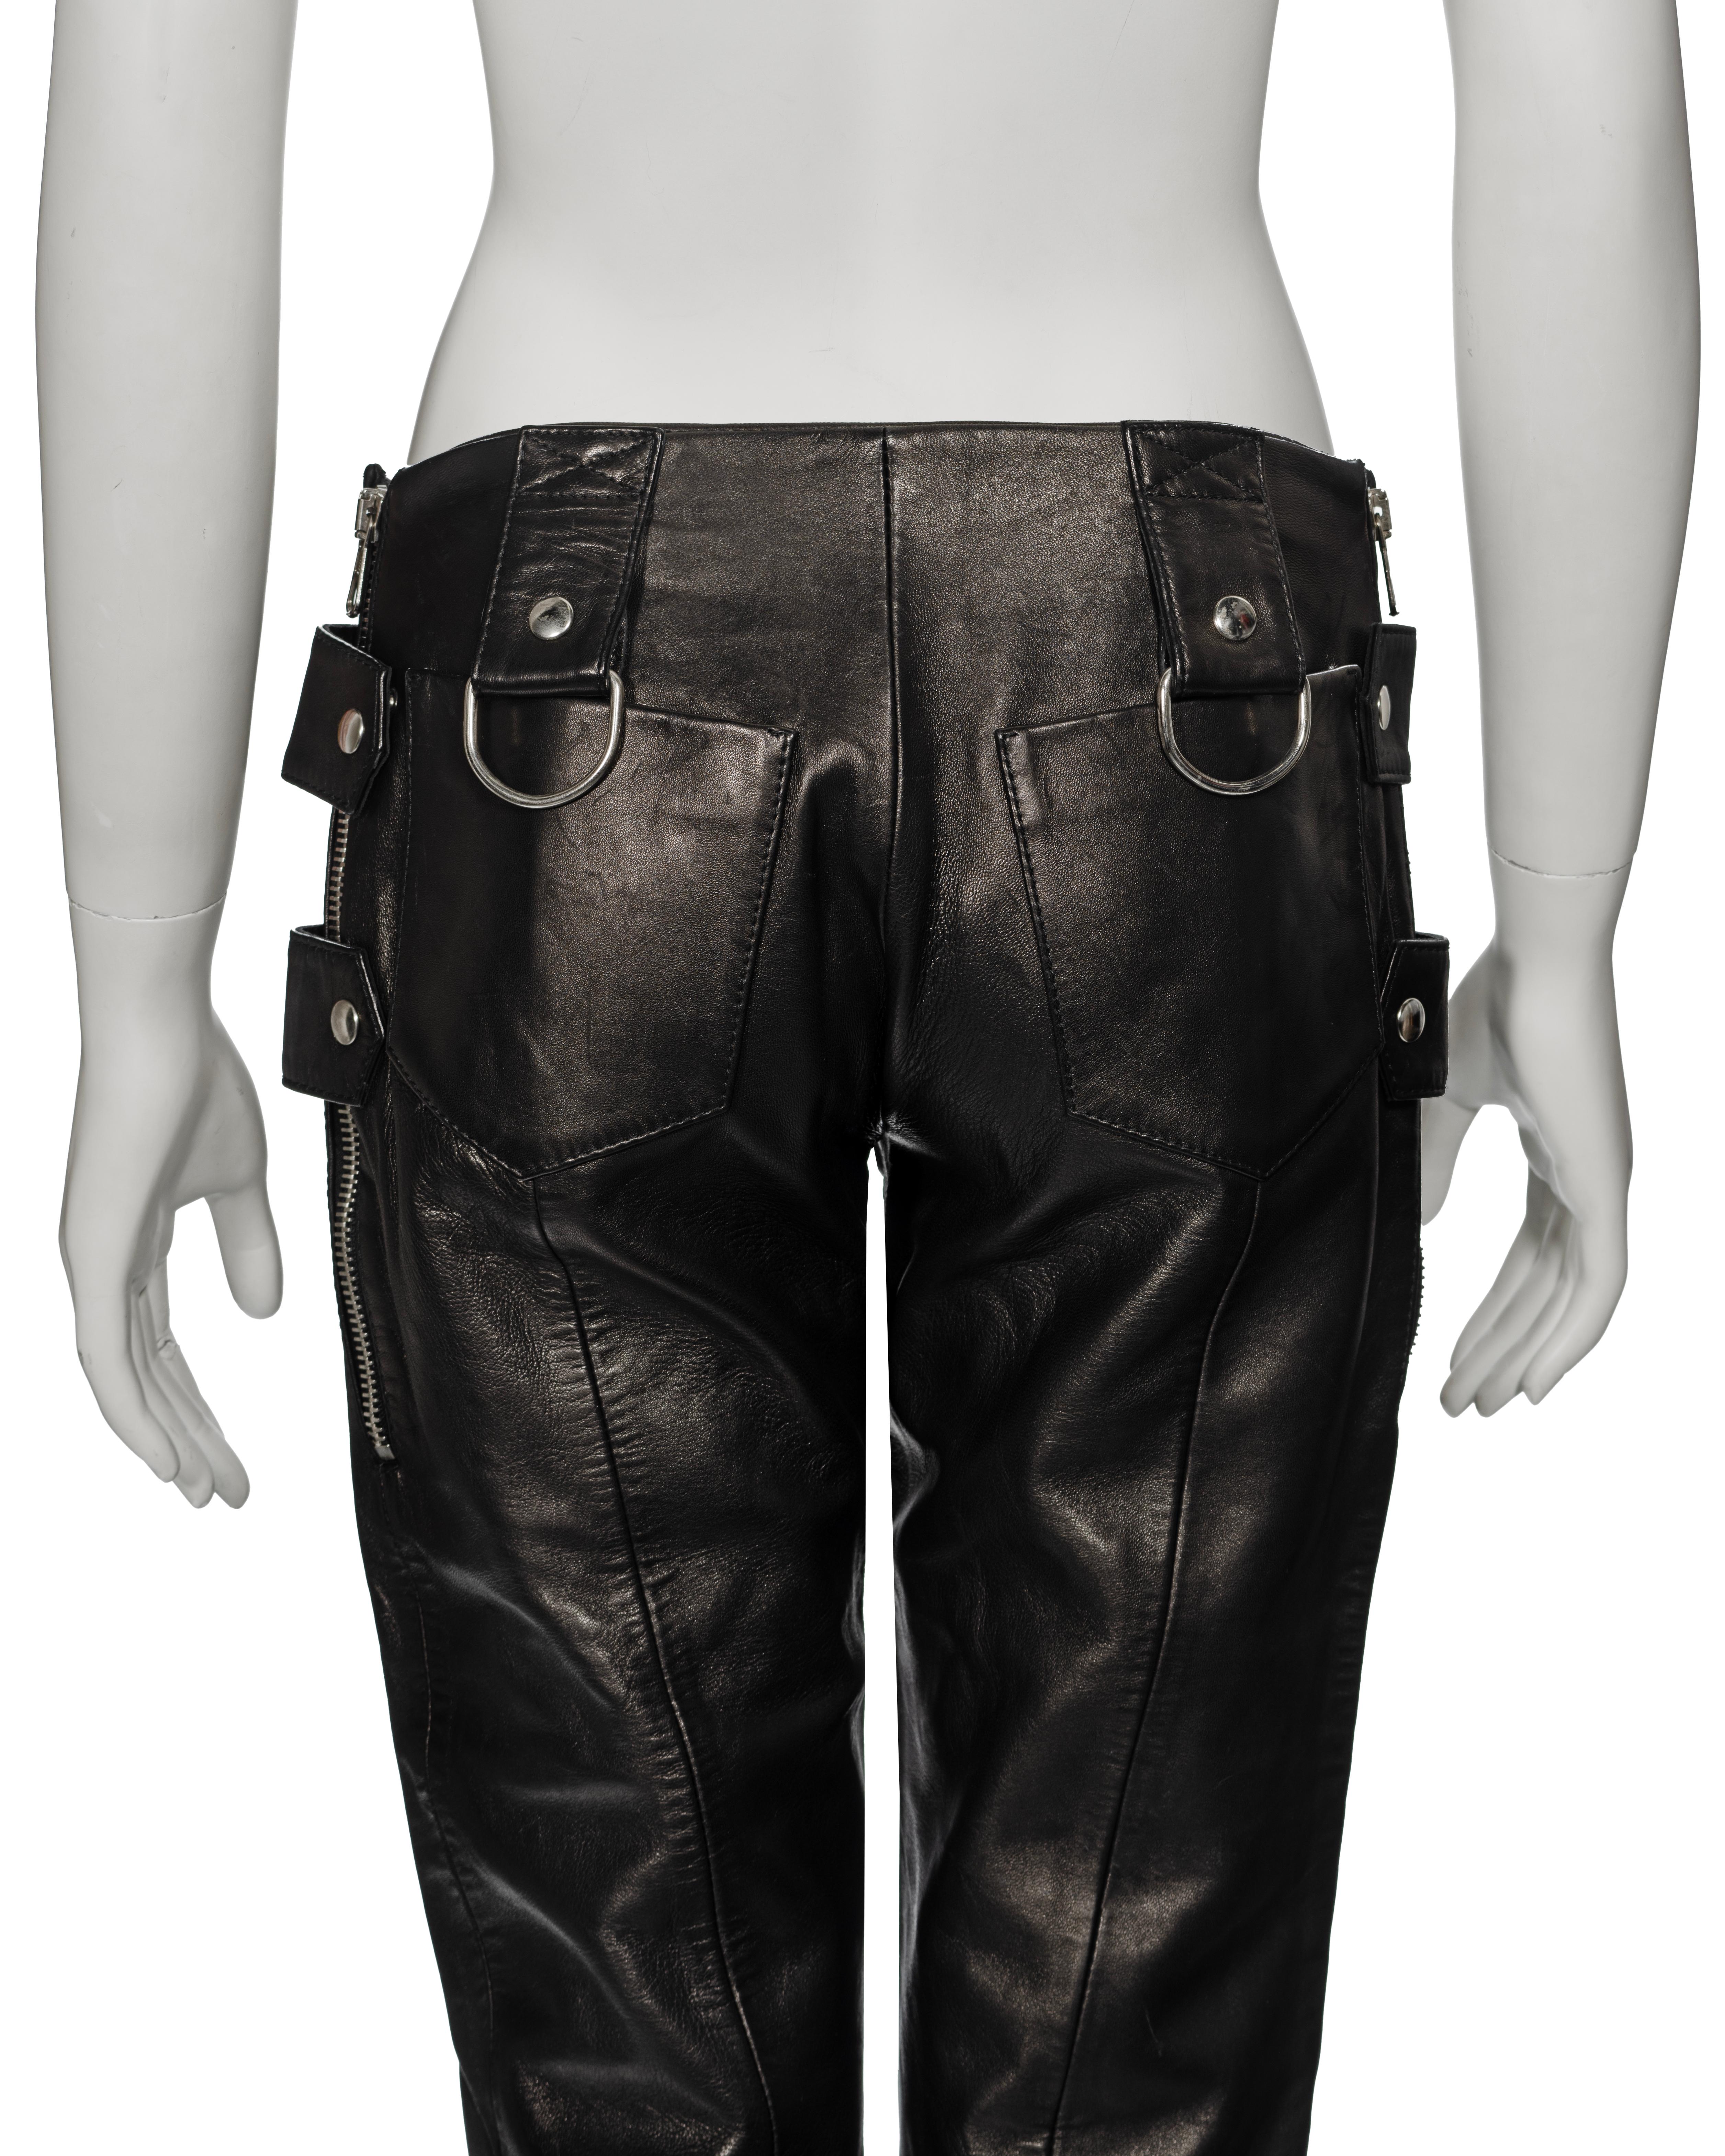 Dolce & Gabbana Black Leather Capri Pants, ss 2000 For Sale 8